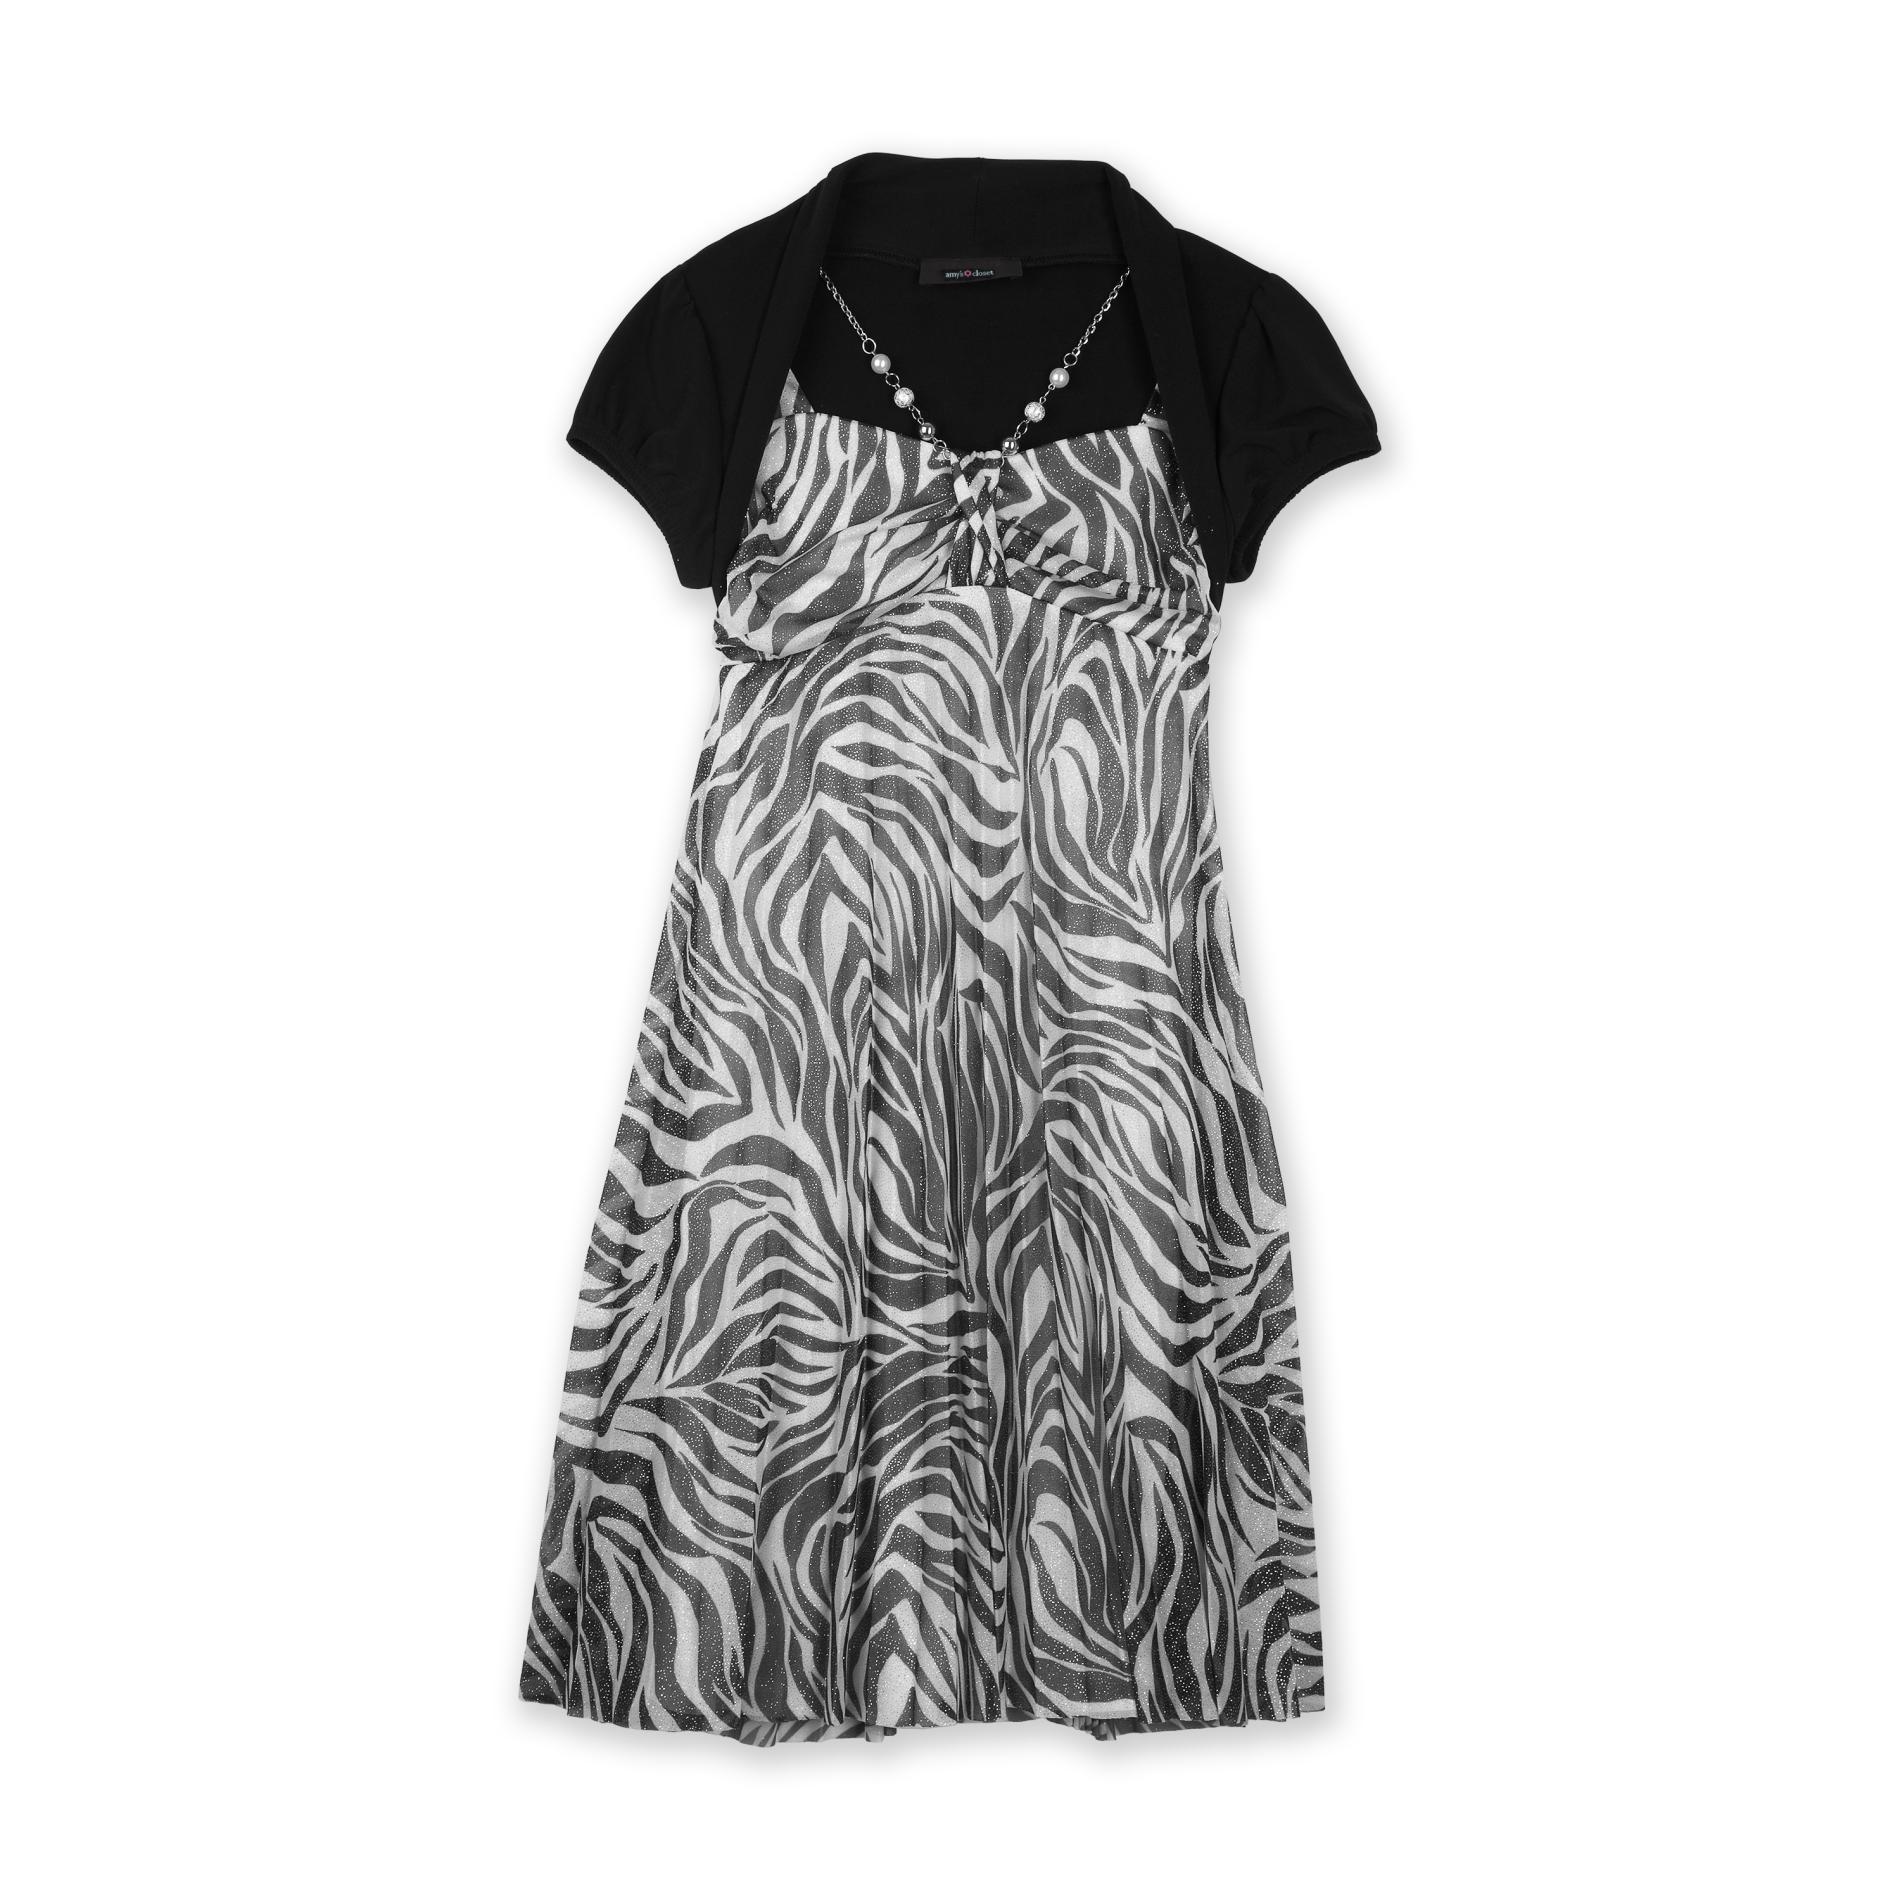 Amy's Closet Girl's Chiffon Dress - Zebra Striped